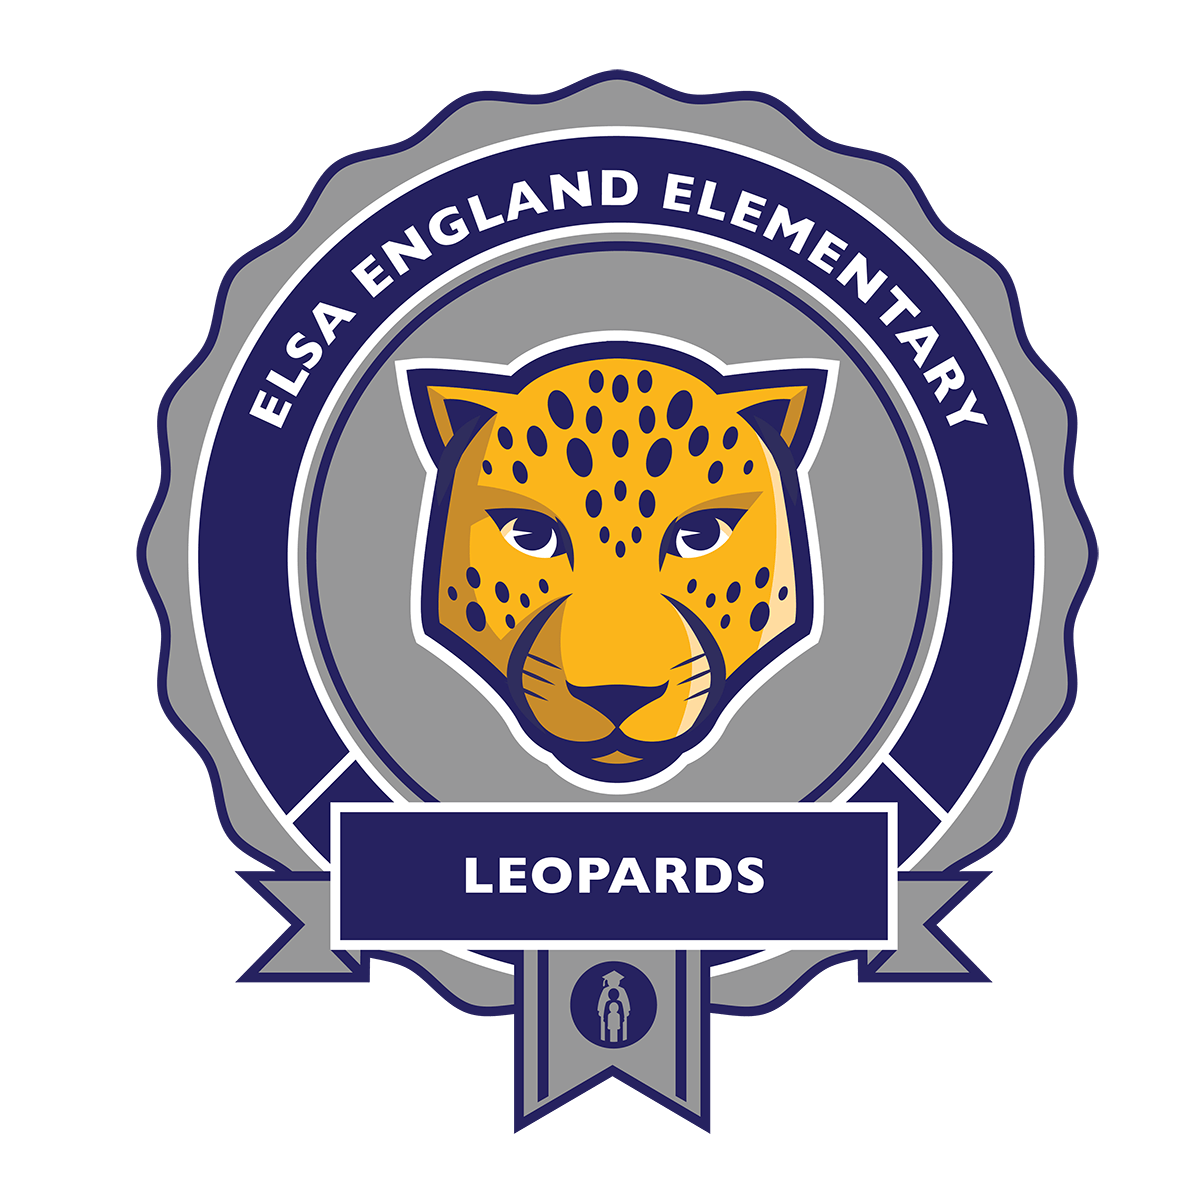 England Elementary Leopards, Est. 2012